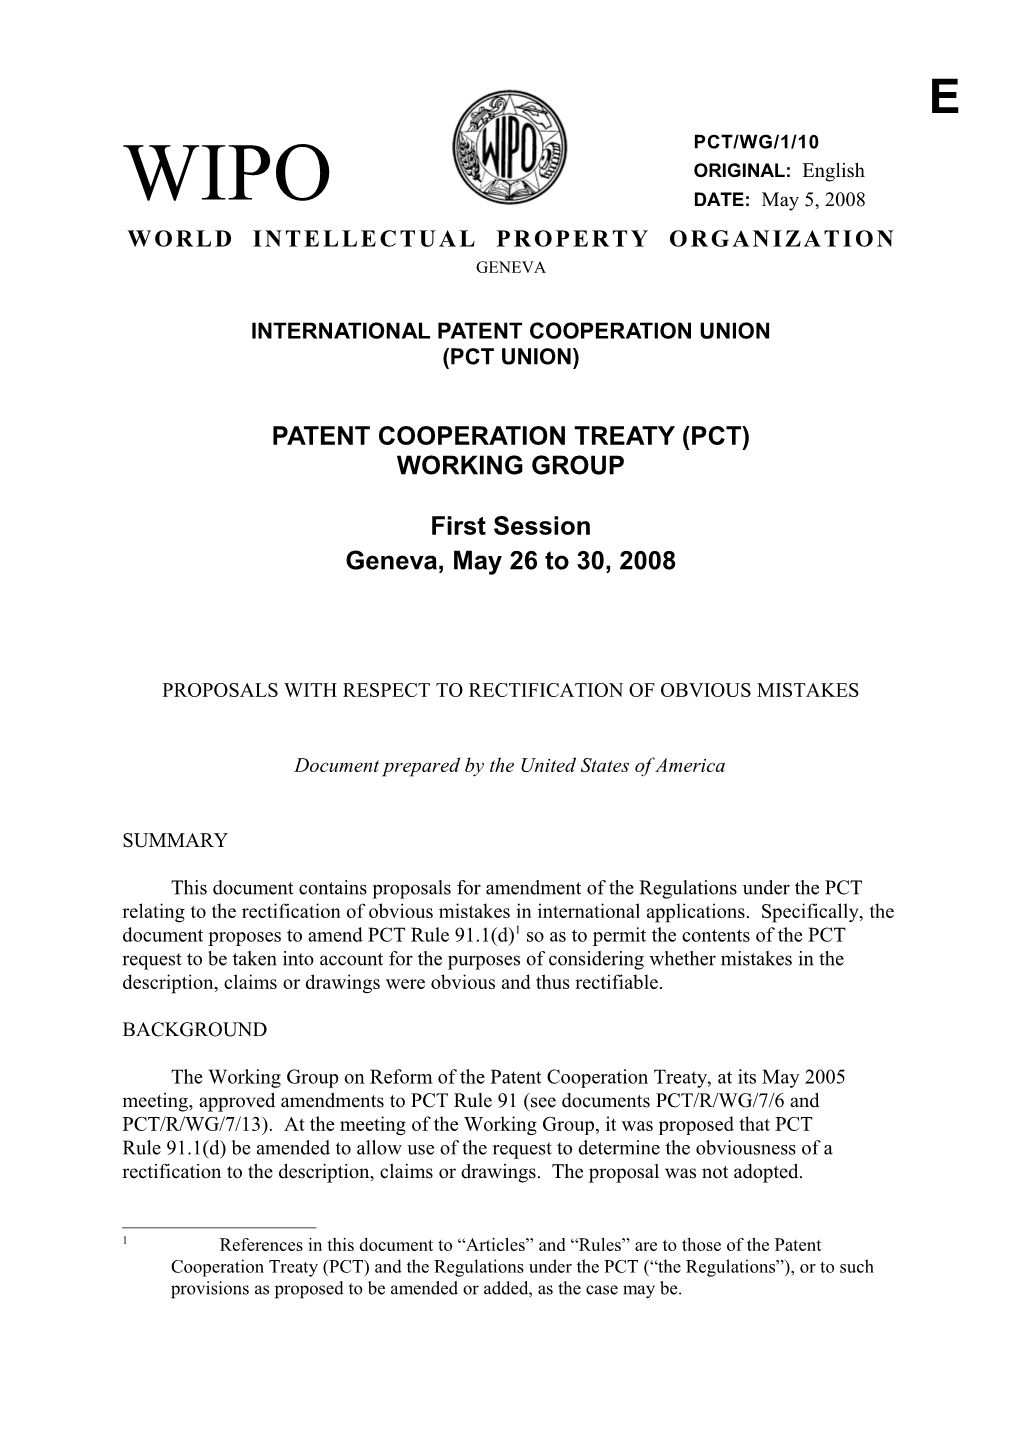 International Patent Cooperation Union (PCT UNION) s6